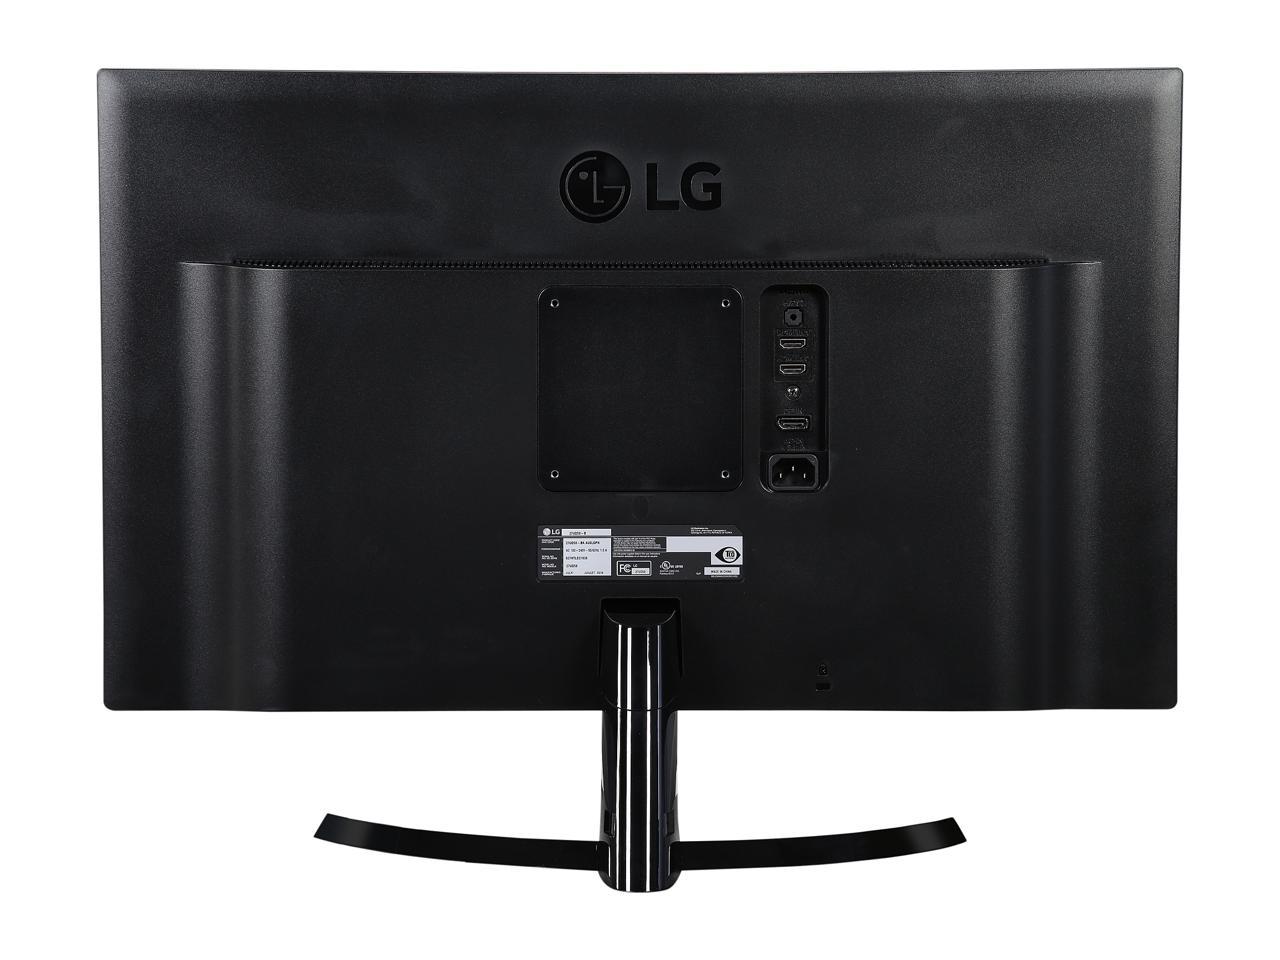 LG 27UD58-B IPS 4K UHD Free-Sync Gaming Monitor, 3840 x 2160, 1000:1 Contrast Ratio, DisplayPort, HDMI, Tilt, VESA Compatible